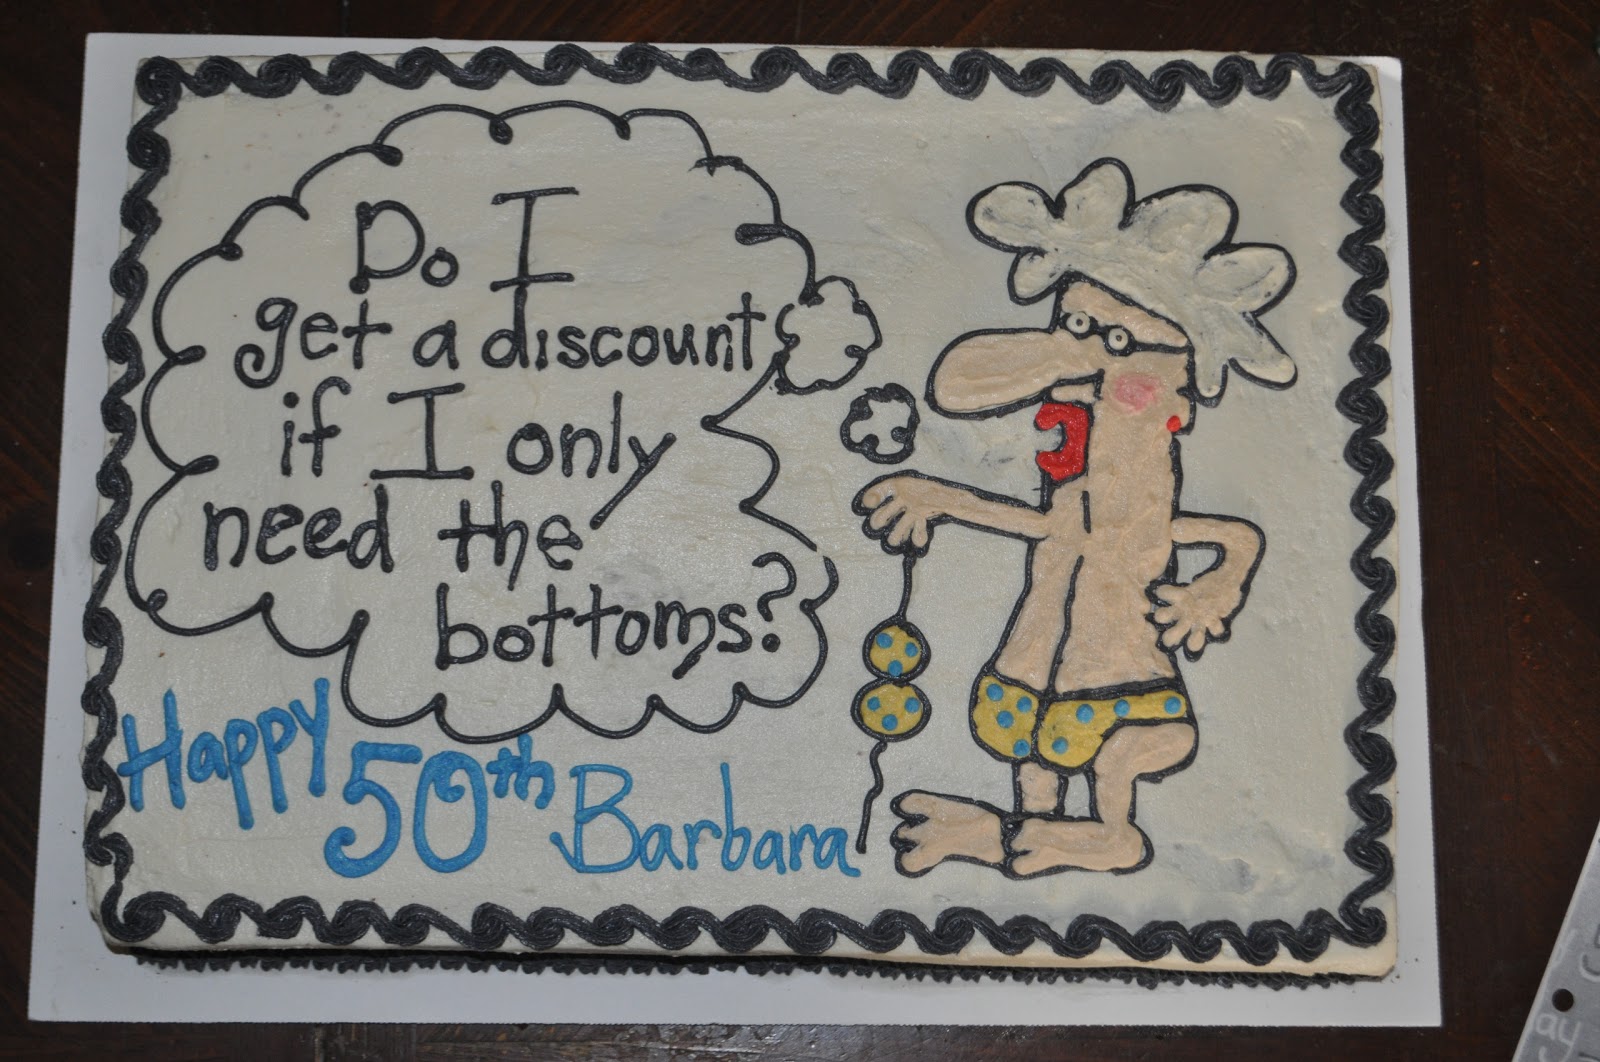 Funny 50th Birthday Cake